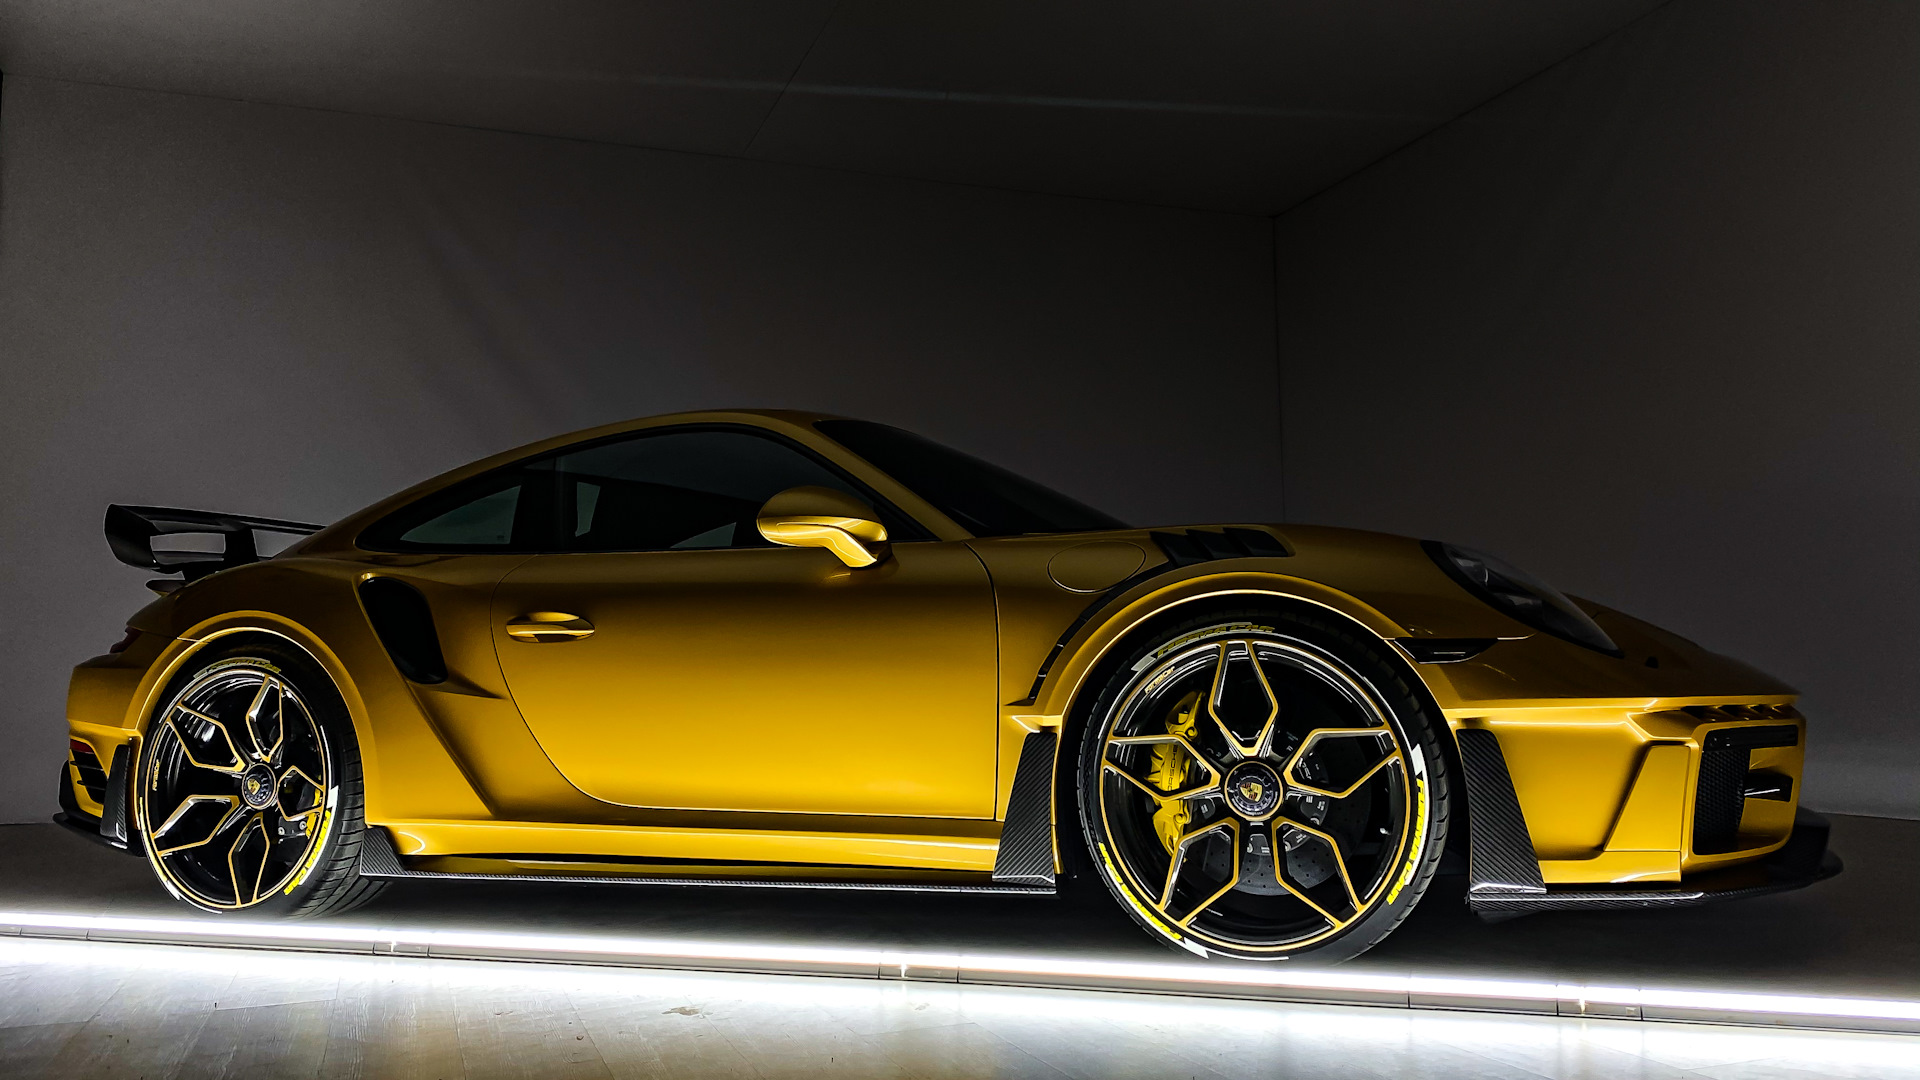 Tecno gold. Porshe 911 Gold Edition. Порше 911 золото. Porsche 911 Venom Gold Edition. Porsche 911 Turbo s Venom.